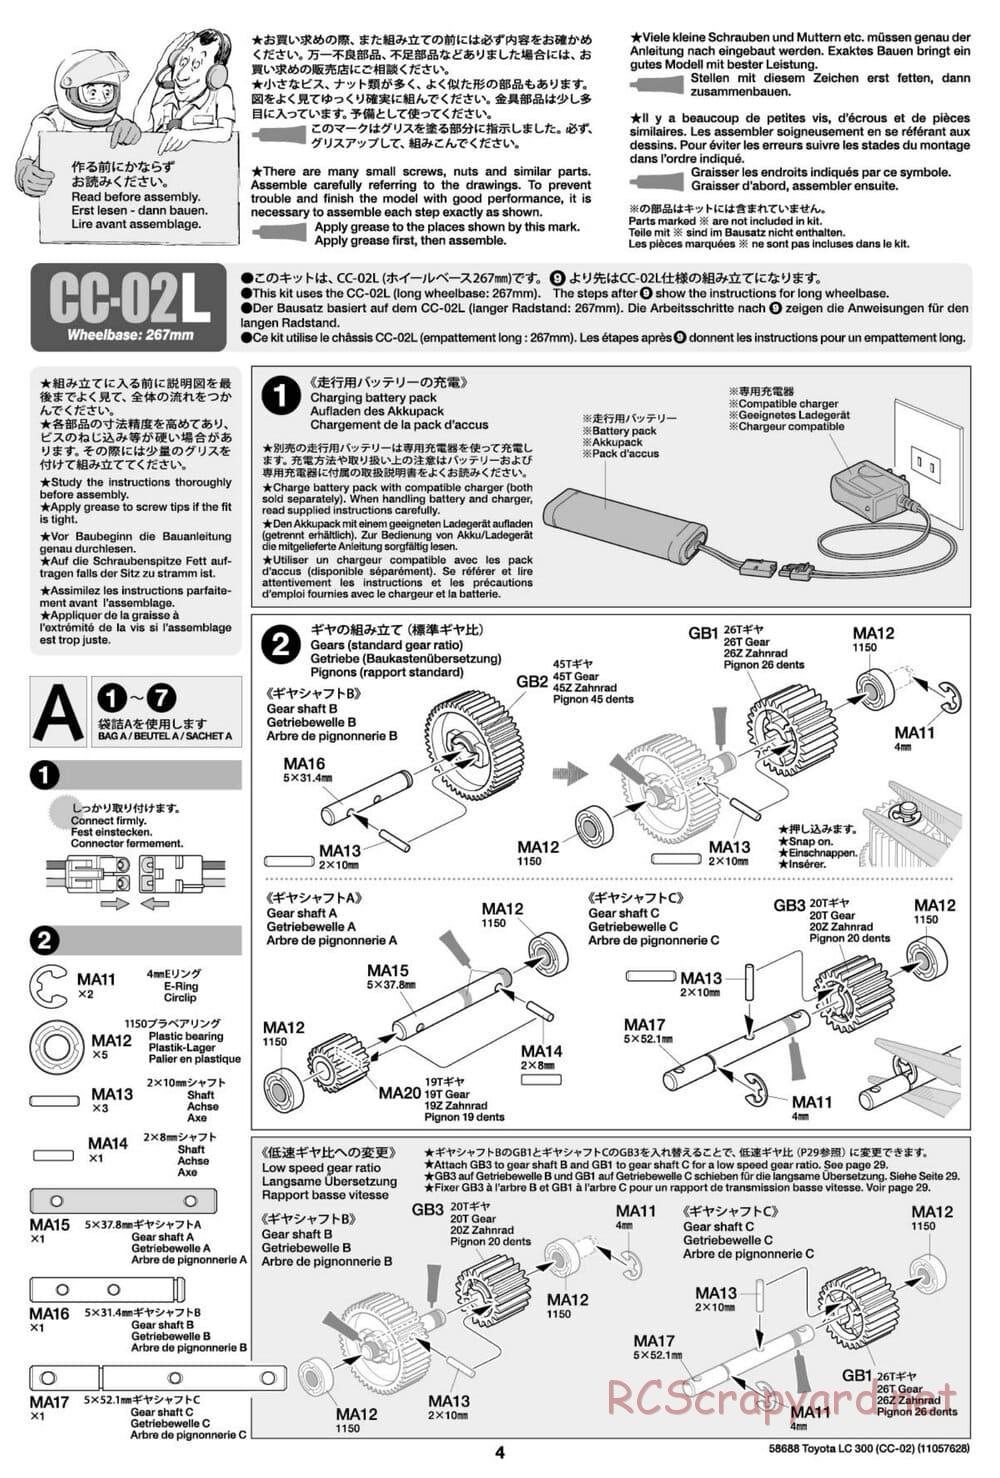 Tamiya - Toyota Land Cruiser 300 - CC-02 Chassis - Manual - Page 4